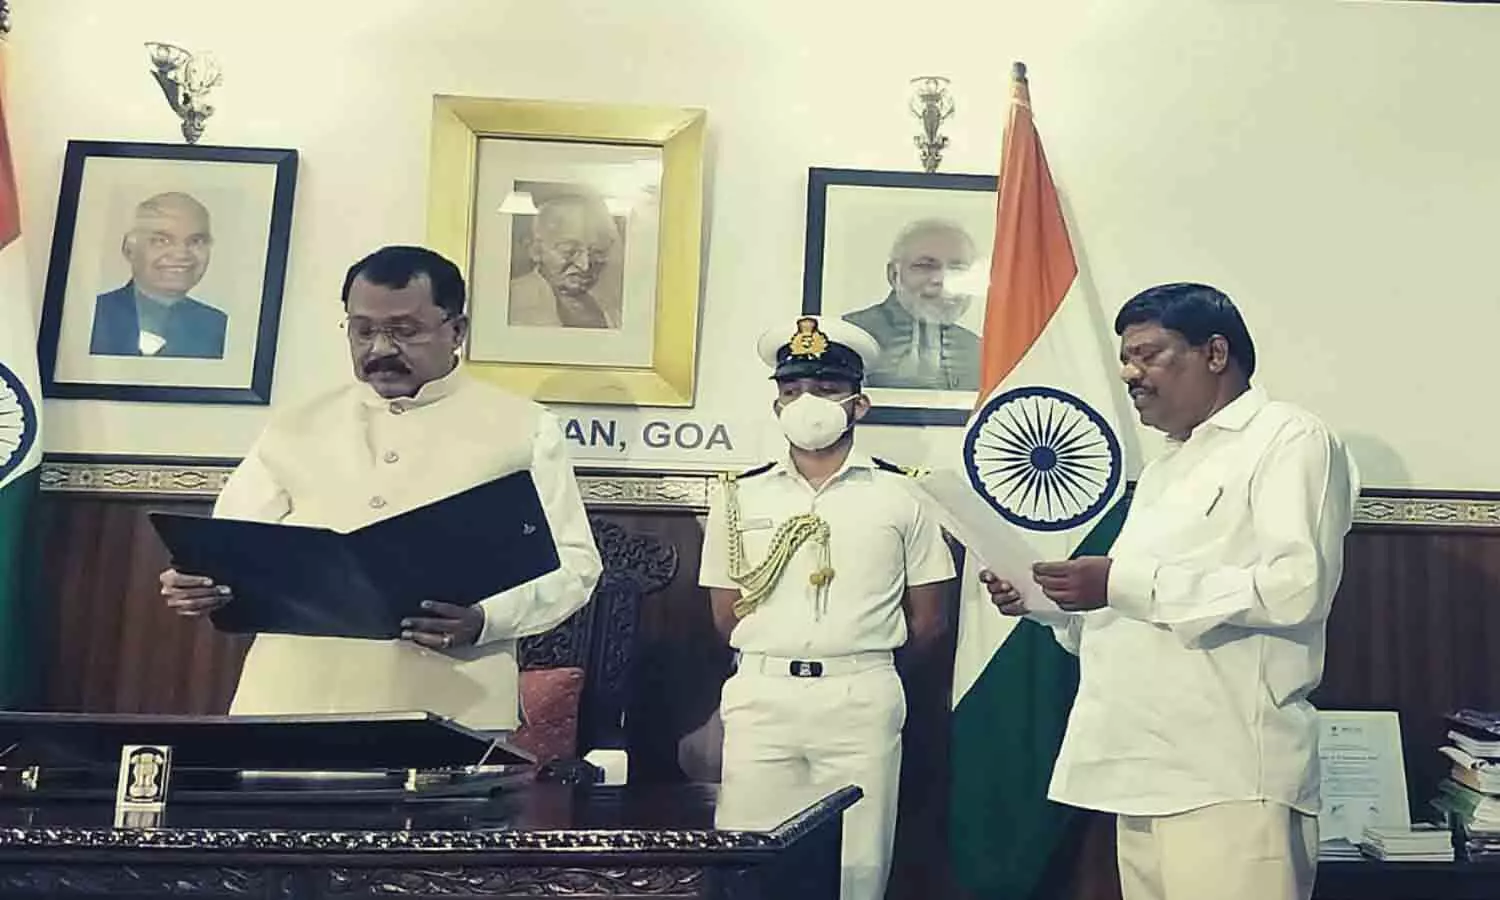 Goa: Ganesh Gaonkar became the Pro-tem Speaker in Goa, Governor PS Sreedharan Pillai administered the oath